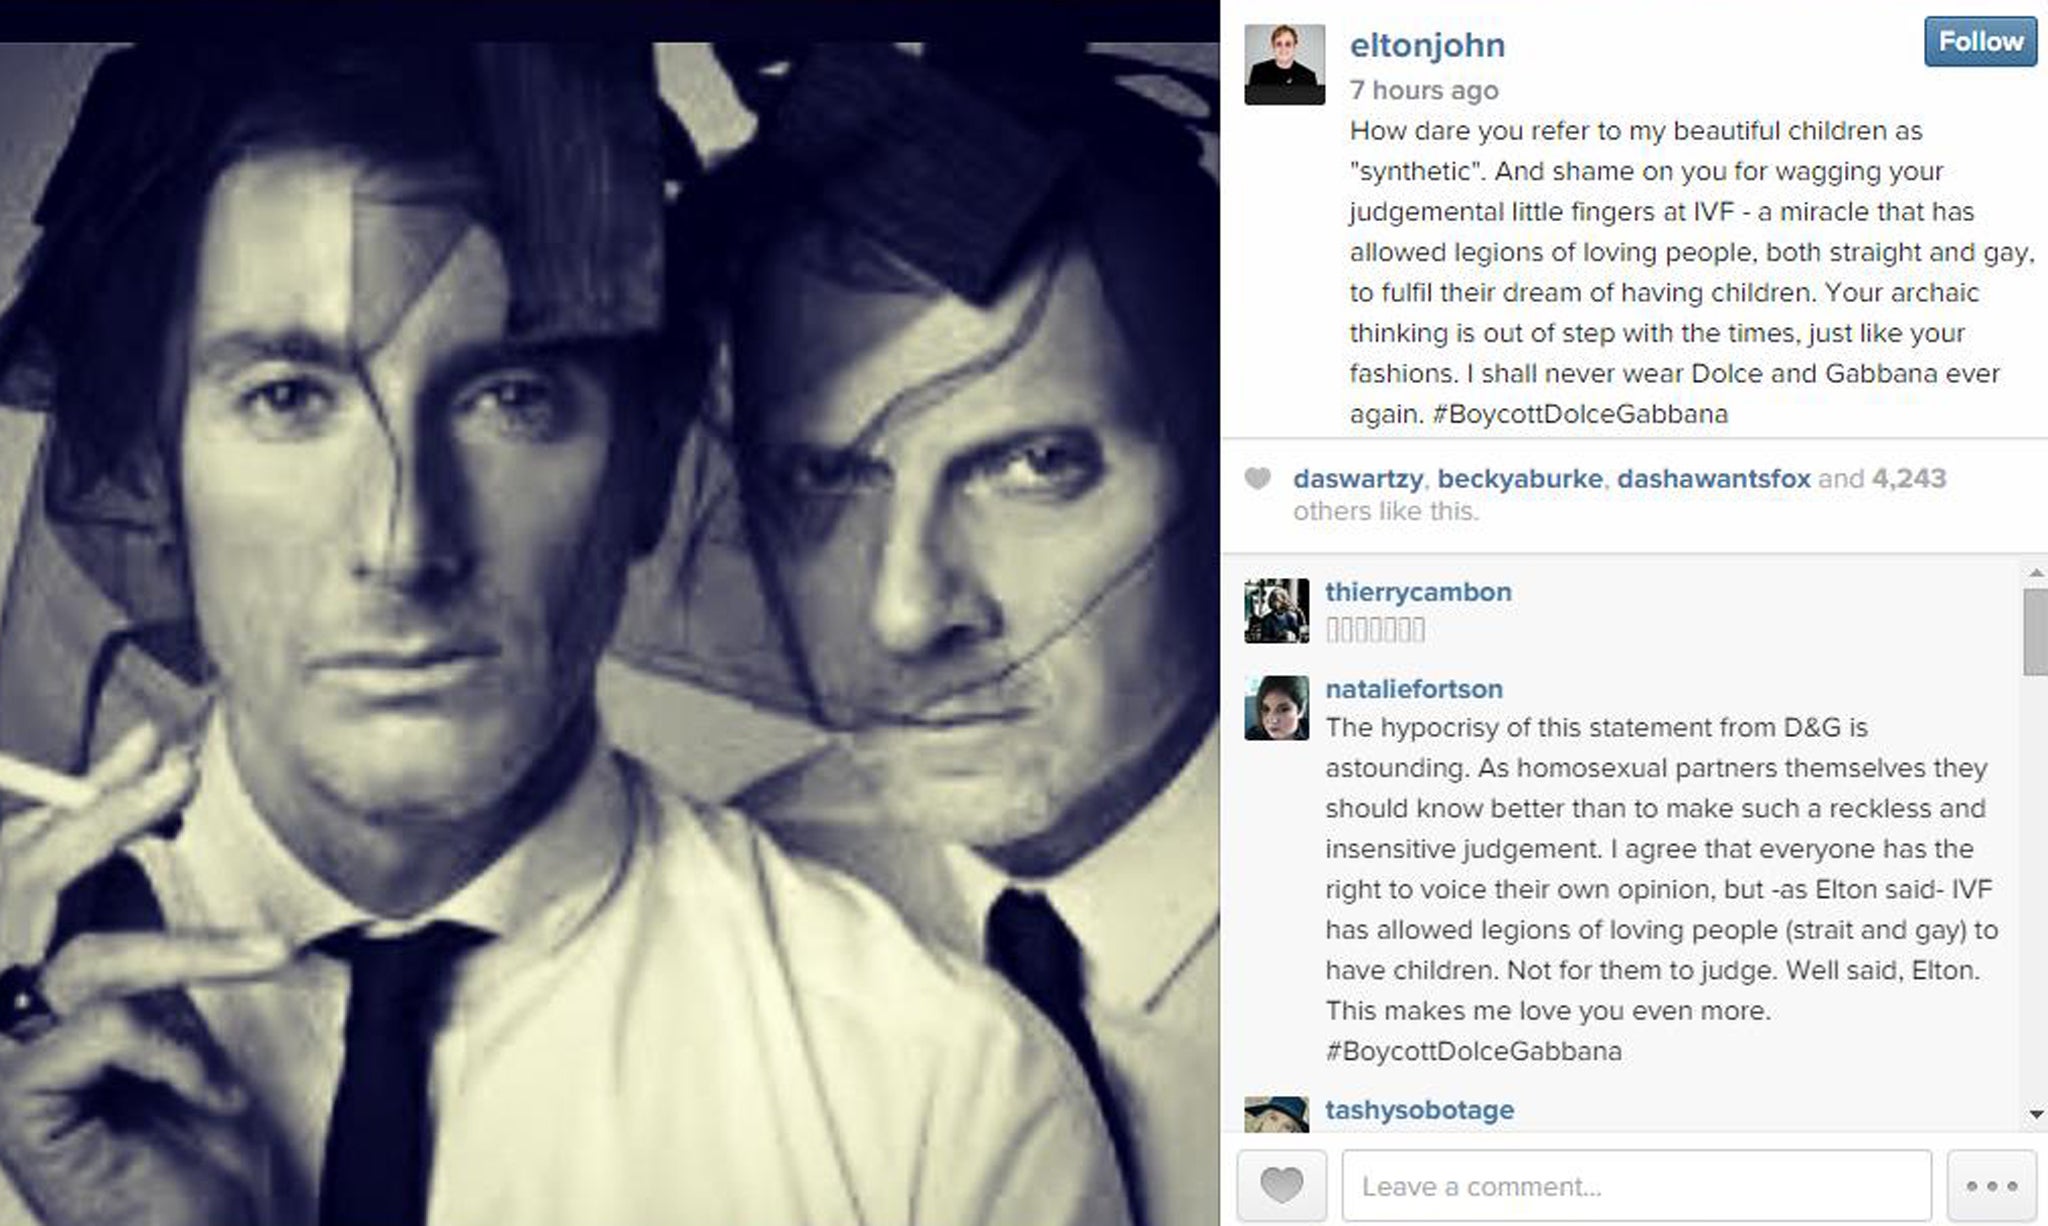 Elton John responds to Dolce and Gabbana on Instagram regarding IVF comments